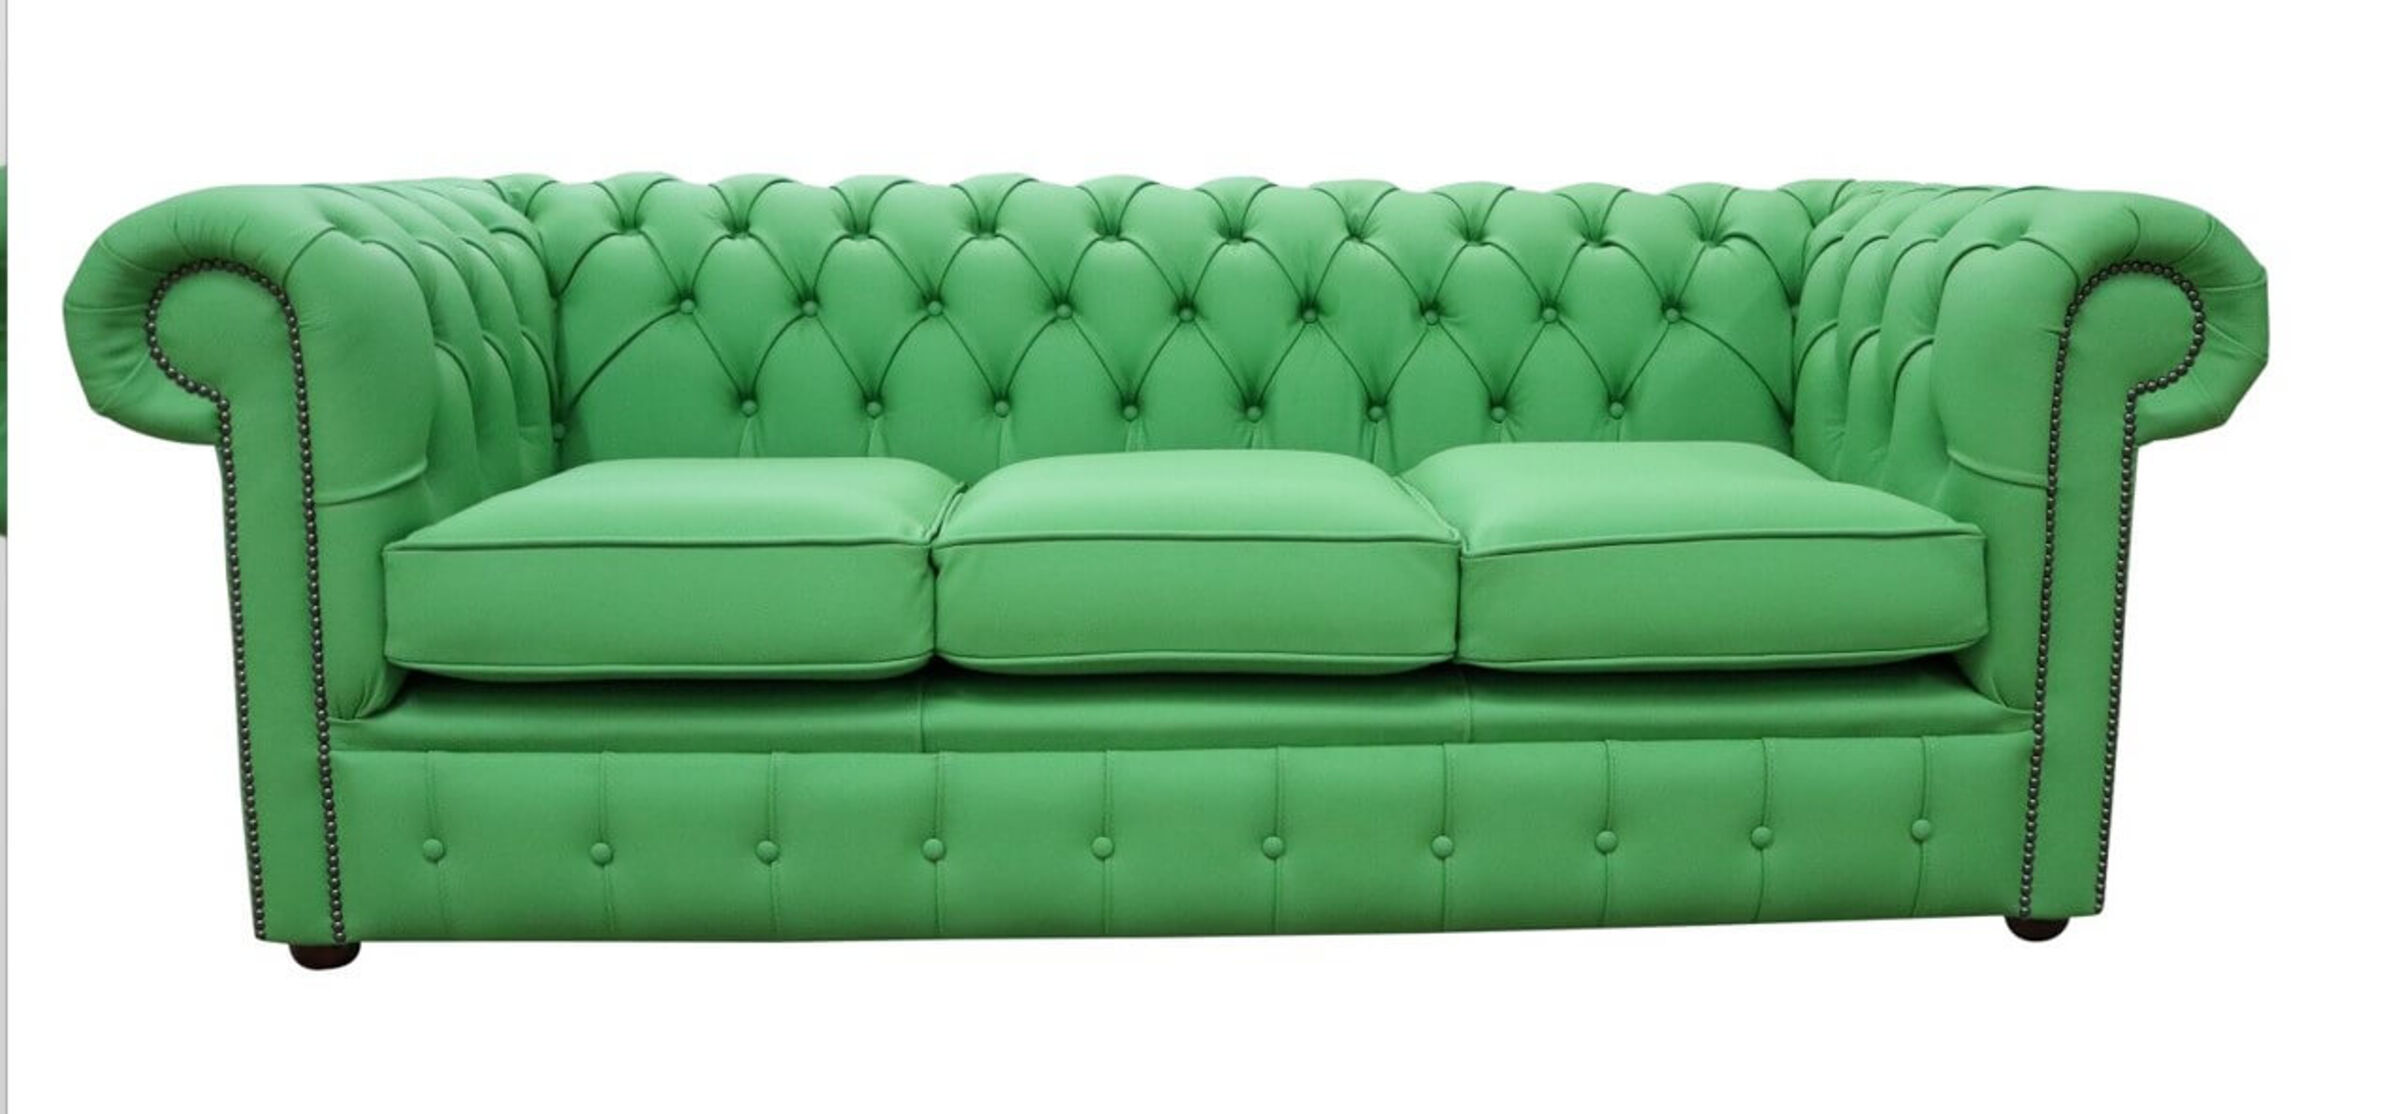 apple green leather sofa